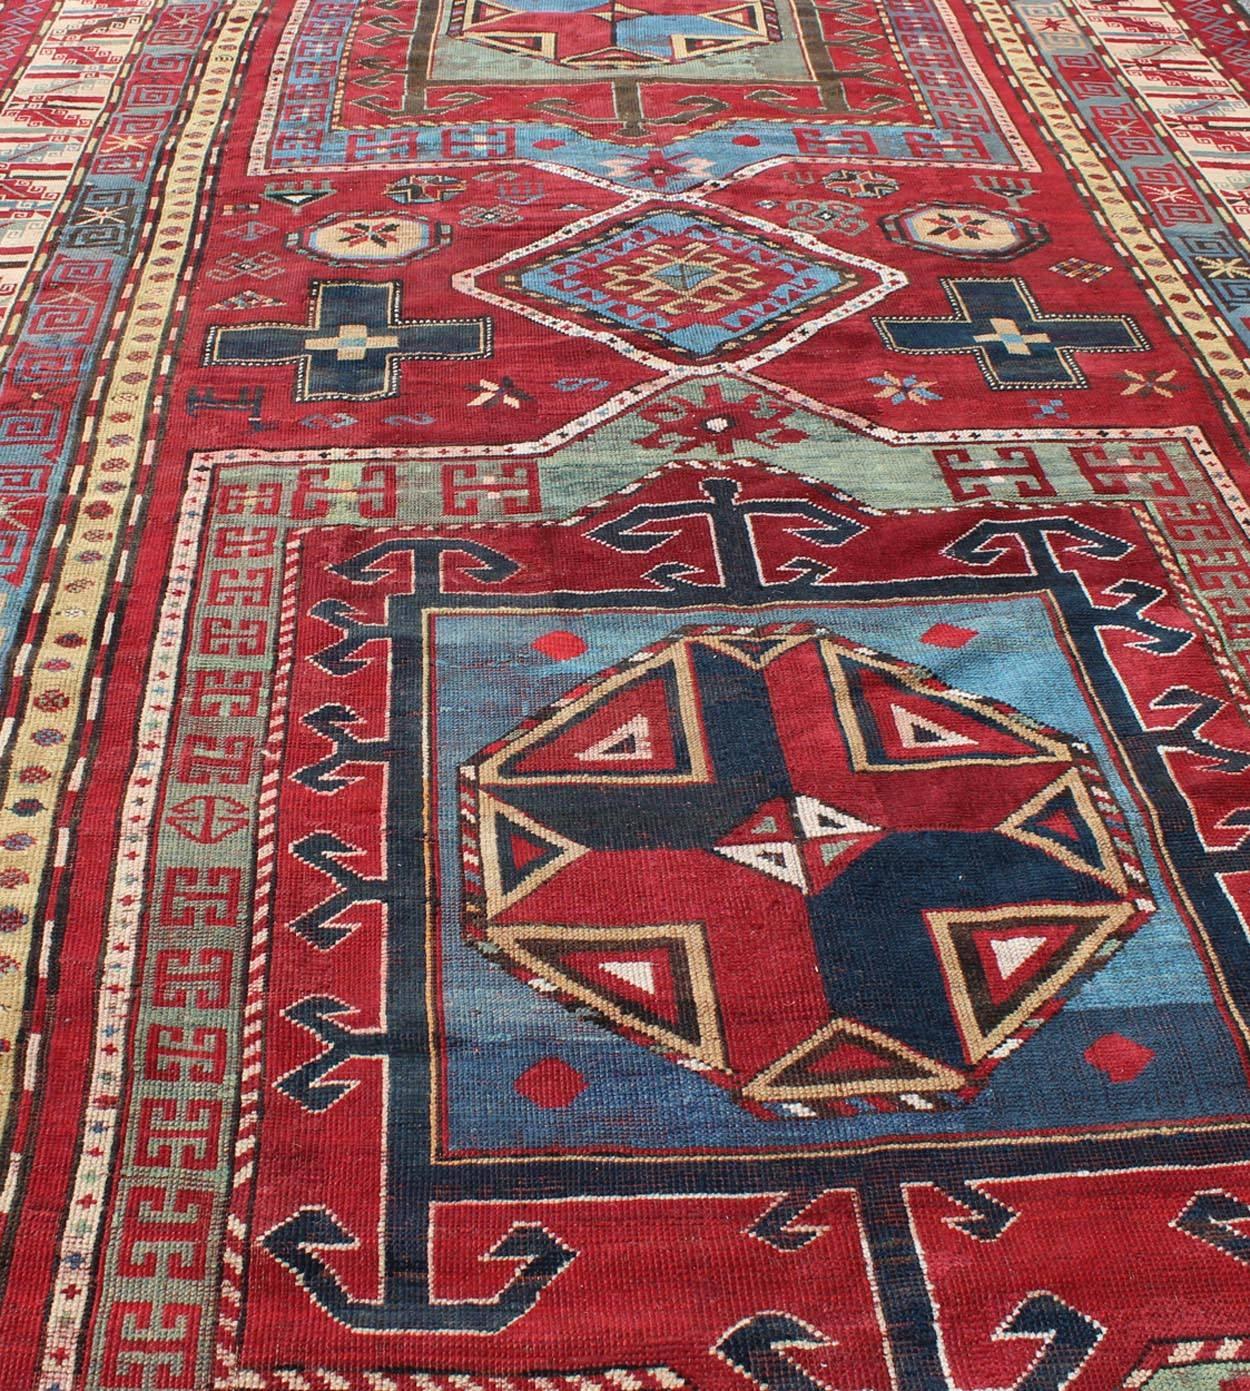 19th Century Antique Caucasus Kazak Gallery Carpet With Dual Geometric Medallion For Sale 1